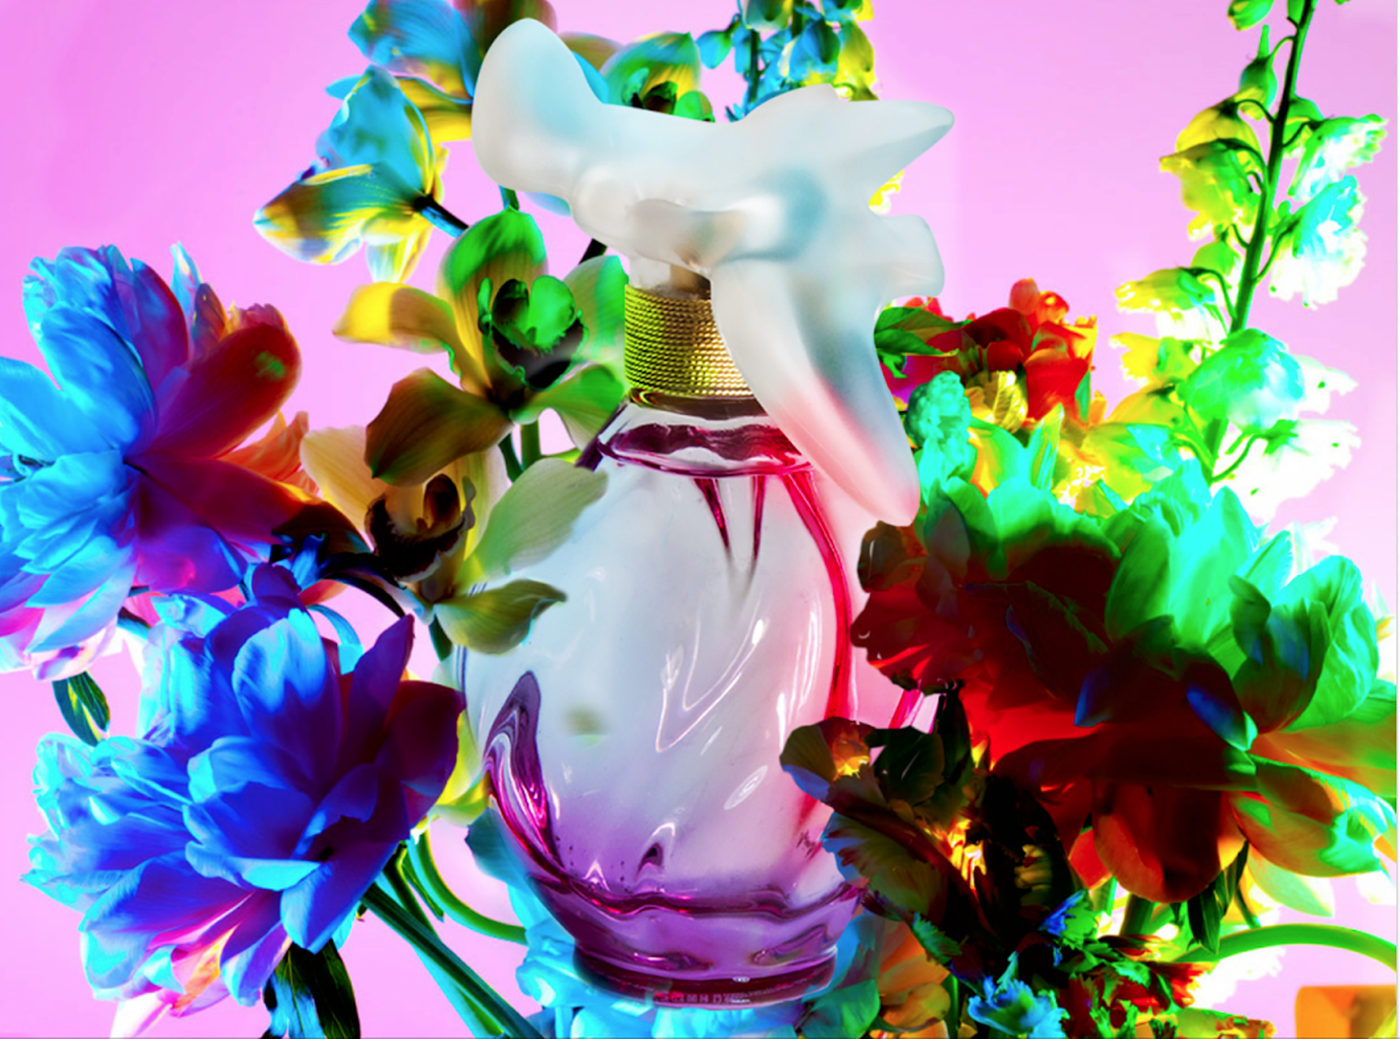 Nina Ricci parfum perfume Flowers flower colors ads ad Paris pink